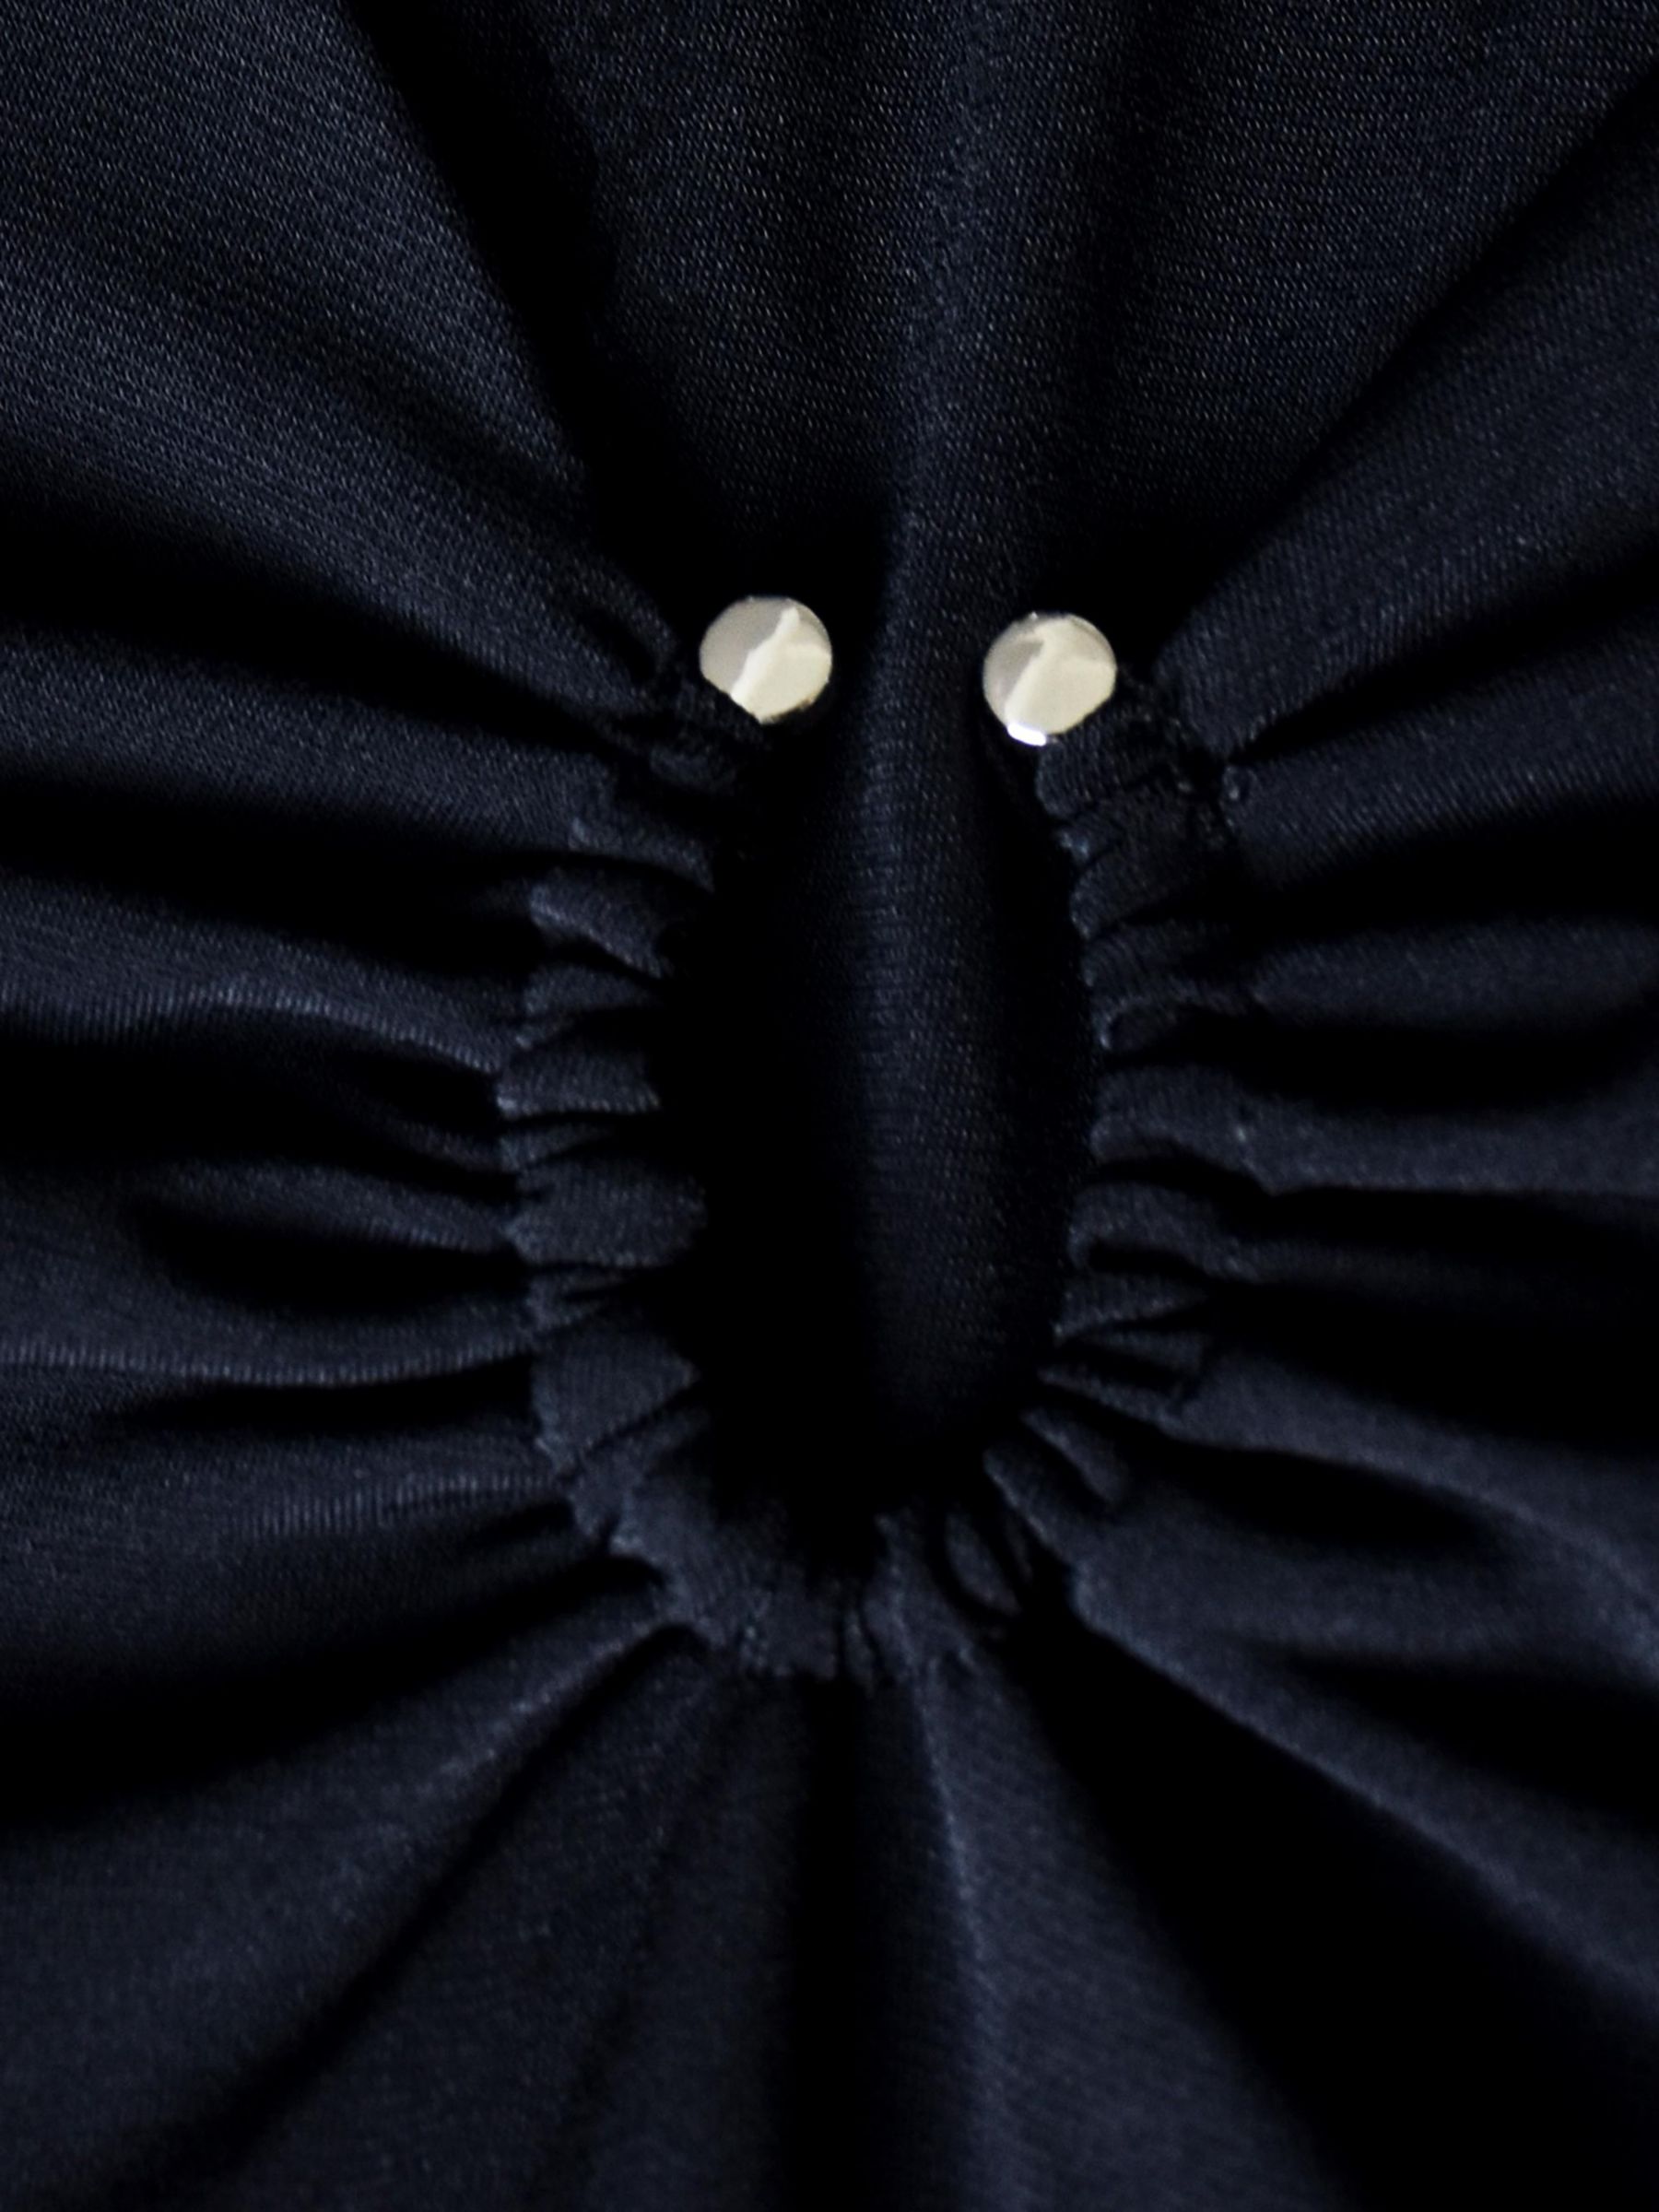 Buy Ro&Zo Trim Detail Midi Jersey Dress, Black Online at johnlewis.com